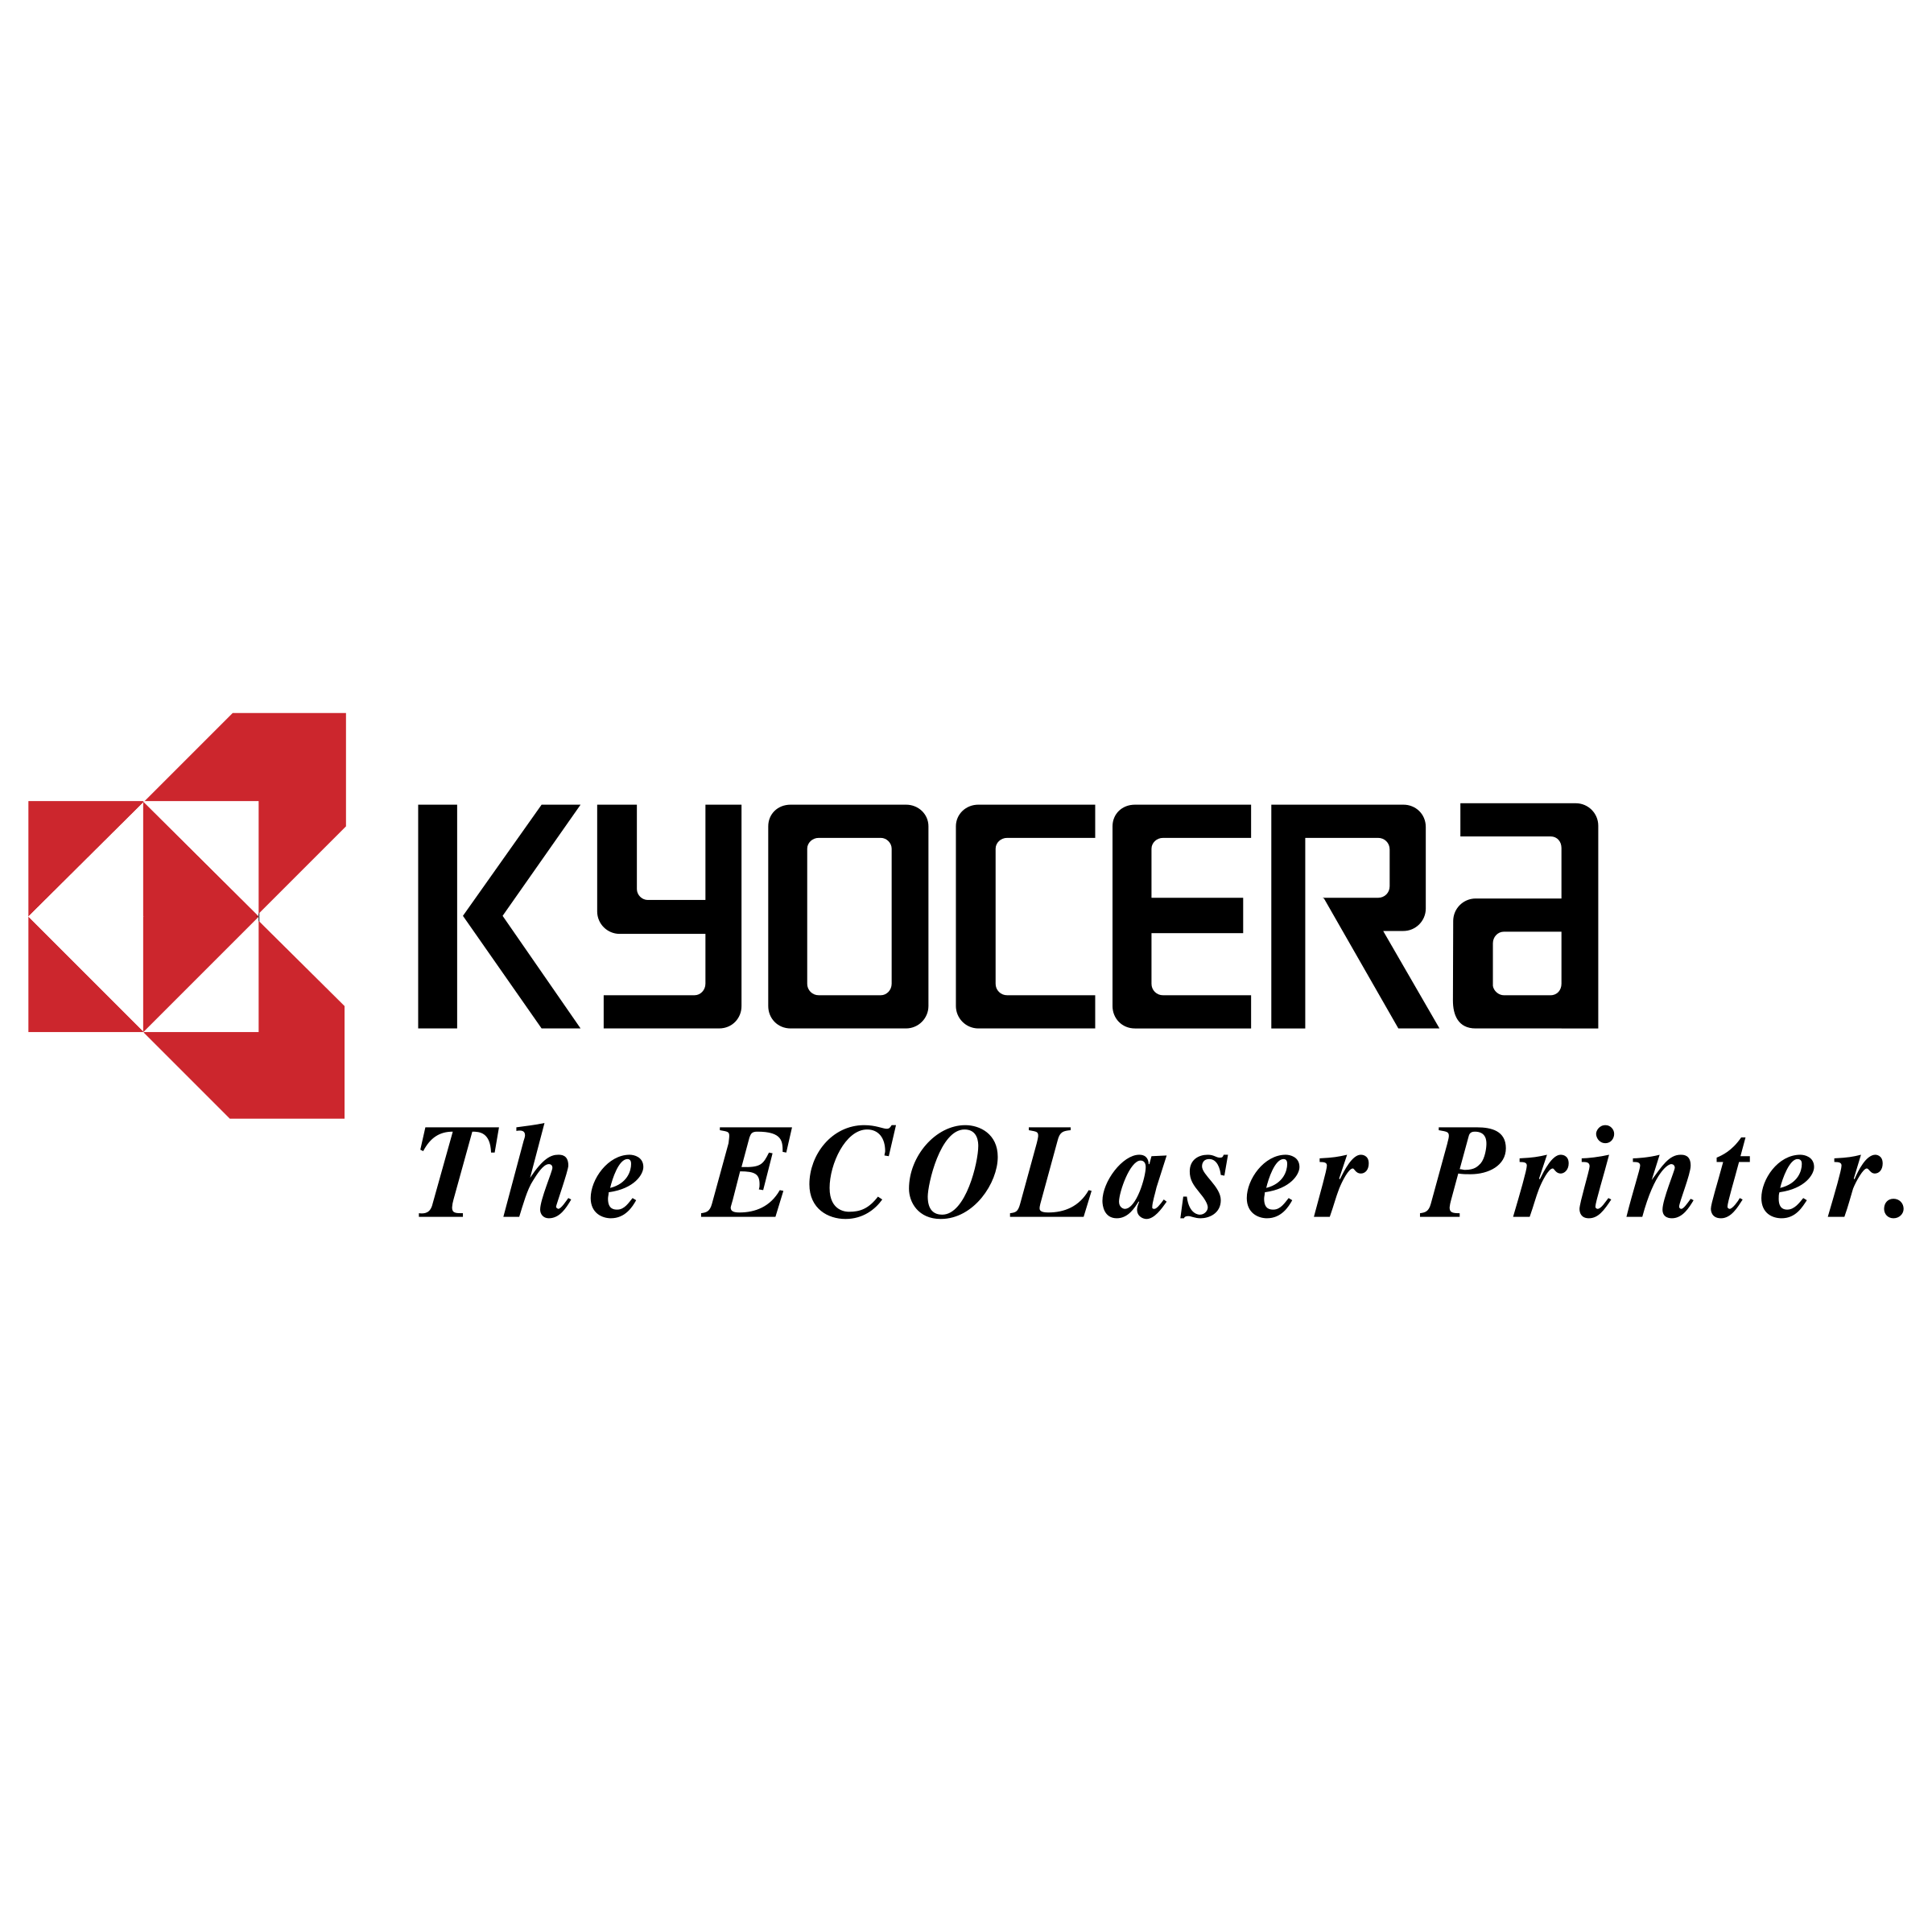 Kyocera Logo - Kyocera Logo PNG Transparent & SVG Vector - Freebie Supply